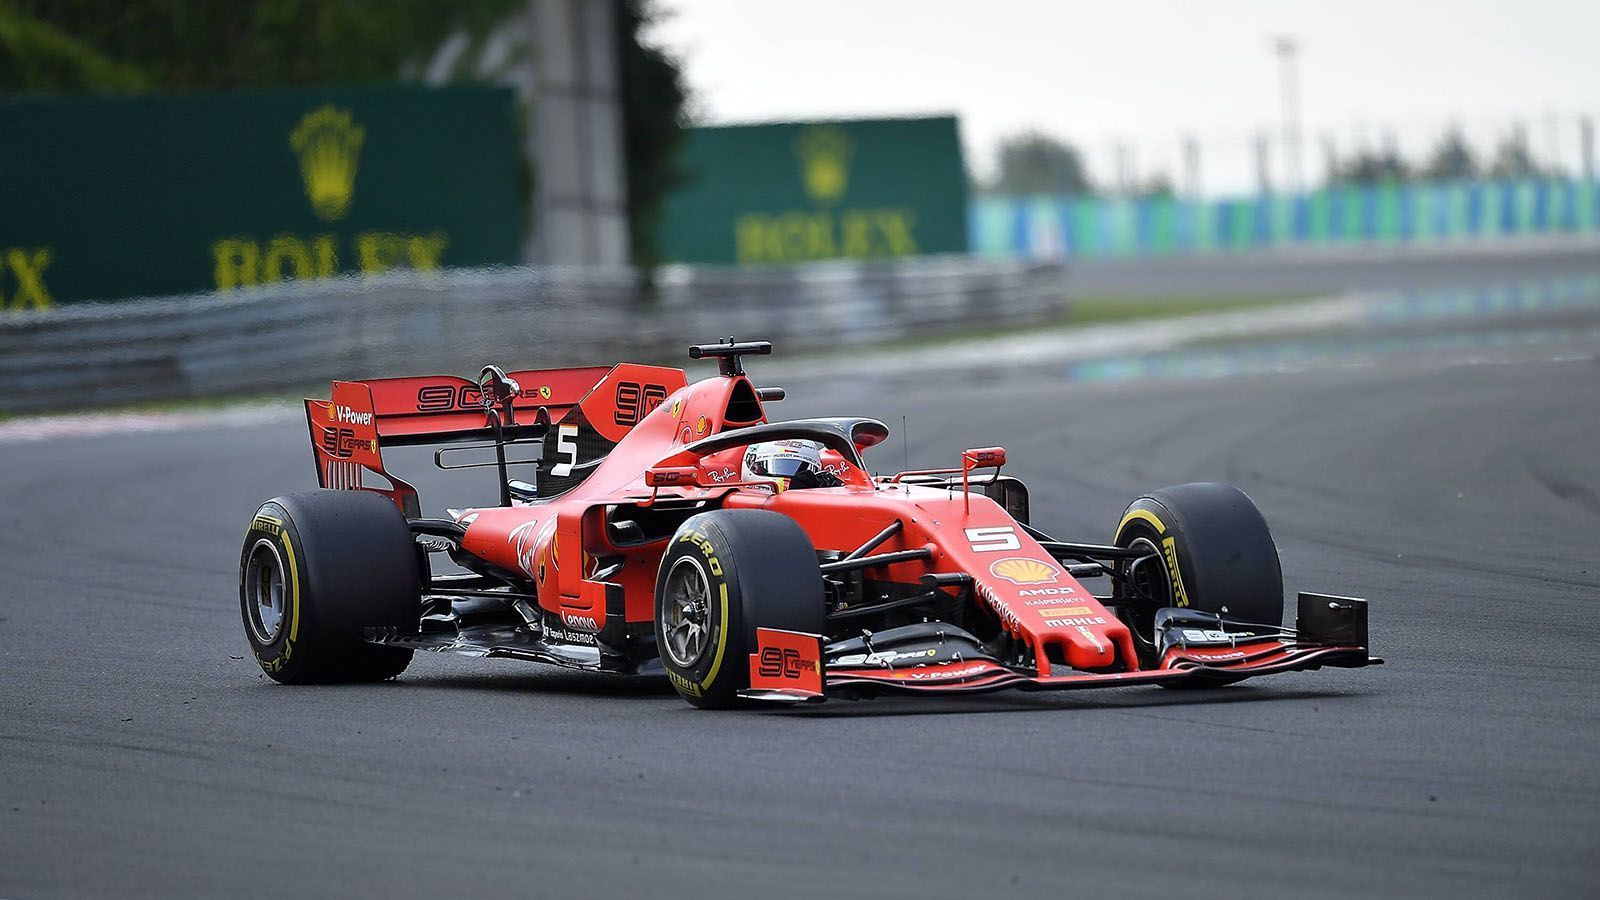 
                <strong>2019</strong><br>
                Beim Fan-Event in Melbourne enthüllt Vettel den Namen. Lean Lina, also schlanke Lina nennt er sein Fahrzeug.
              